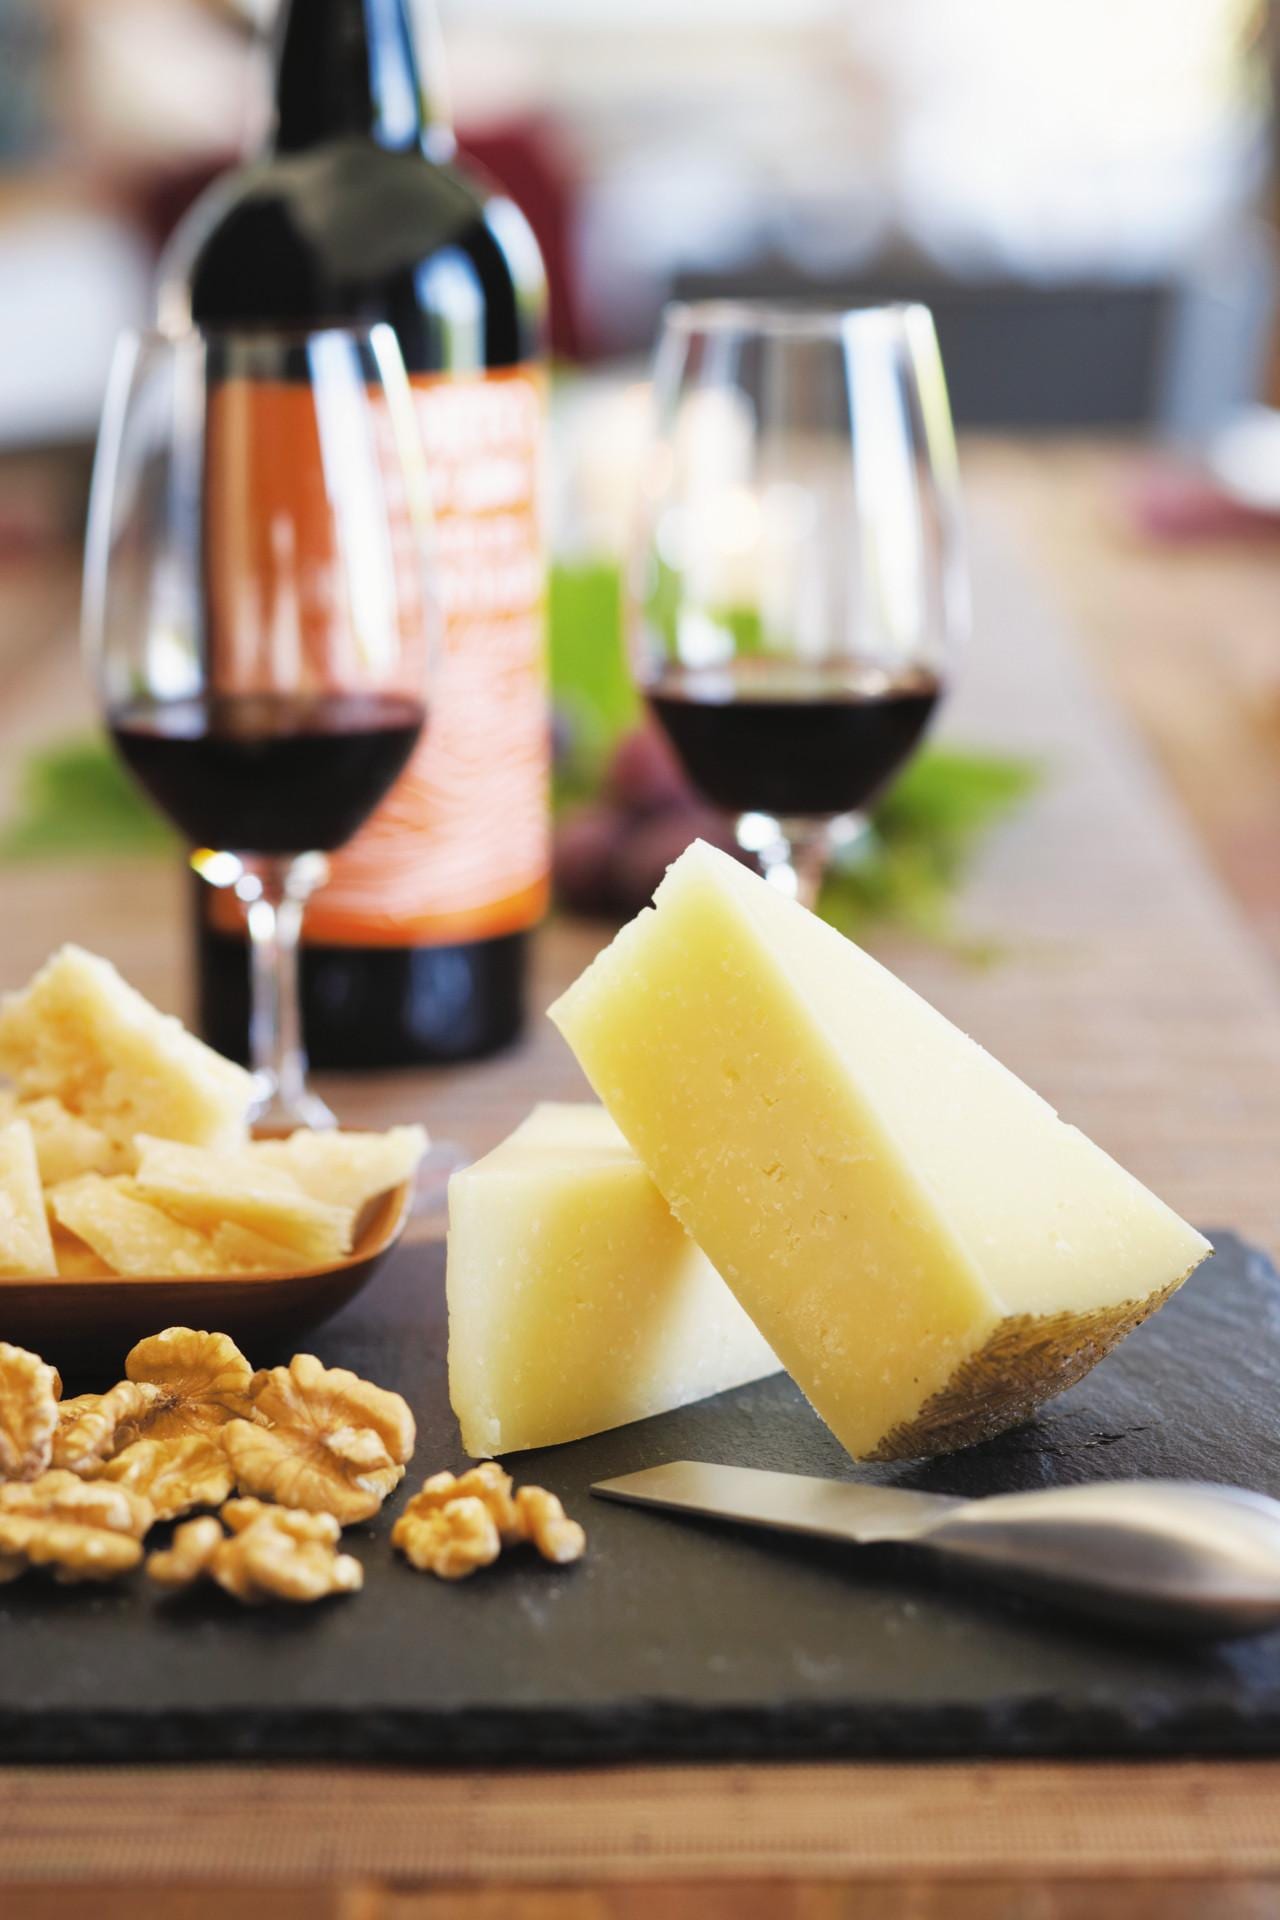 Wine and Cheese: Pairing wine with Monterey Jack cheese